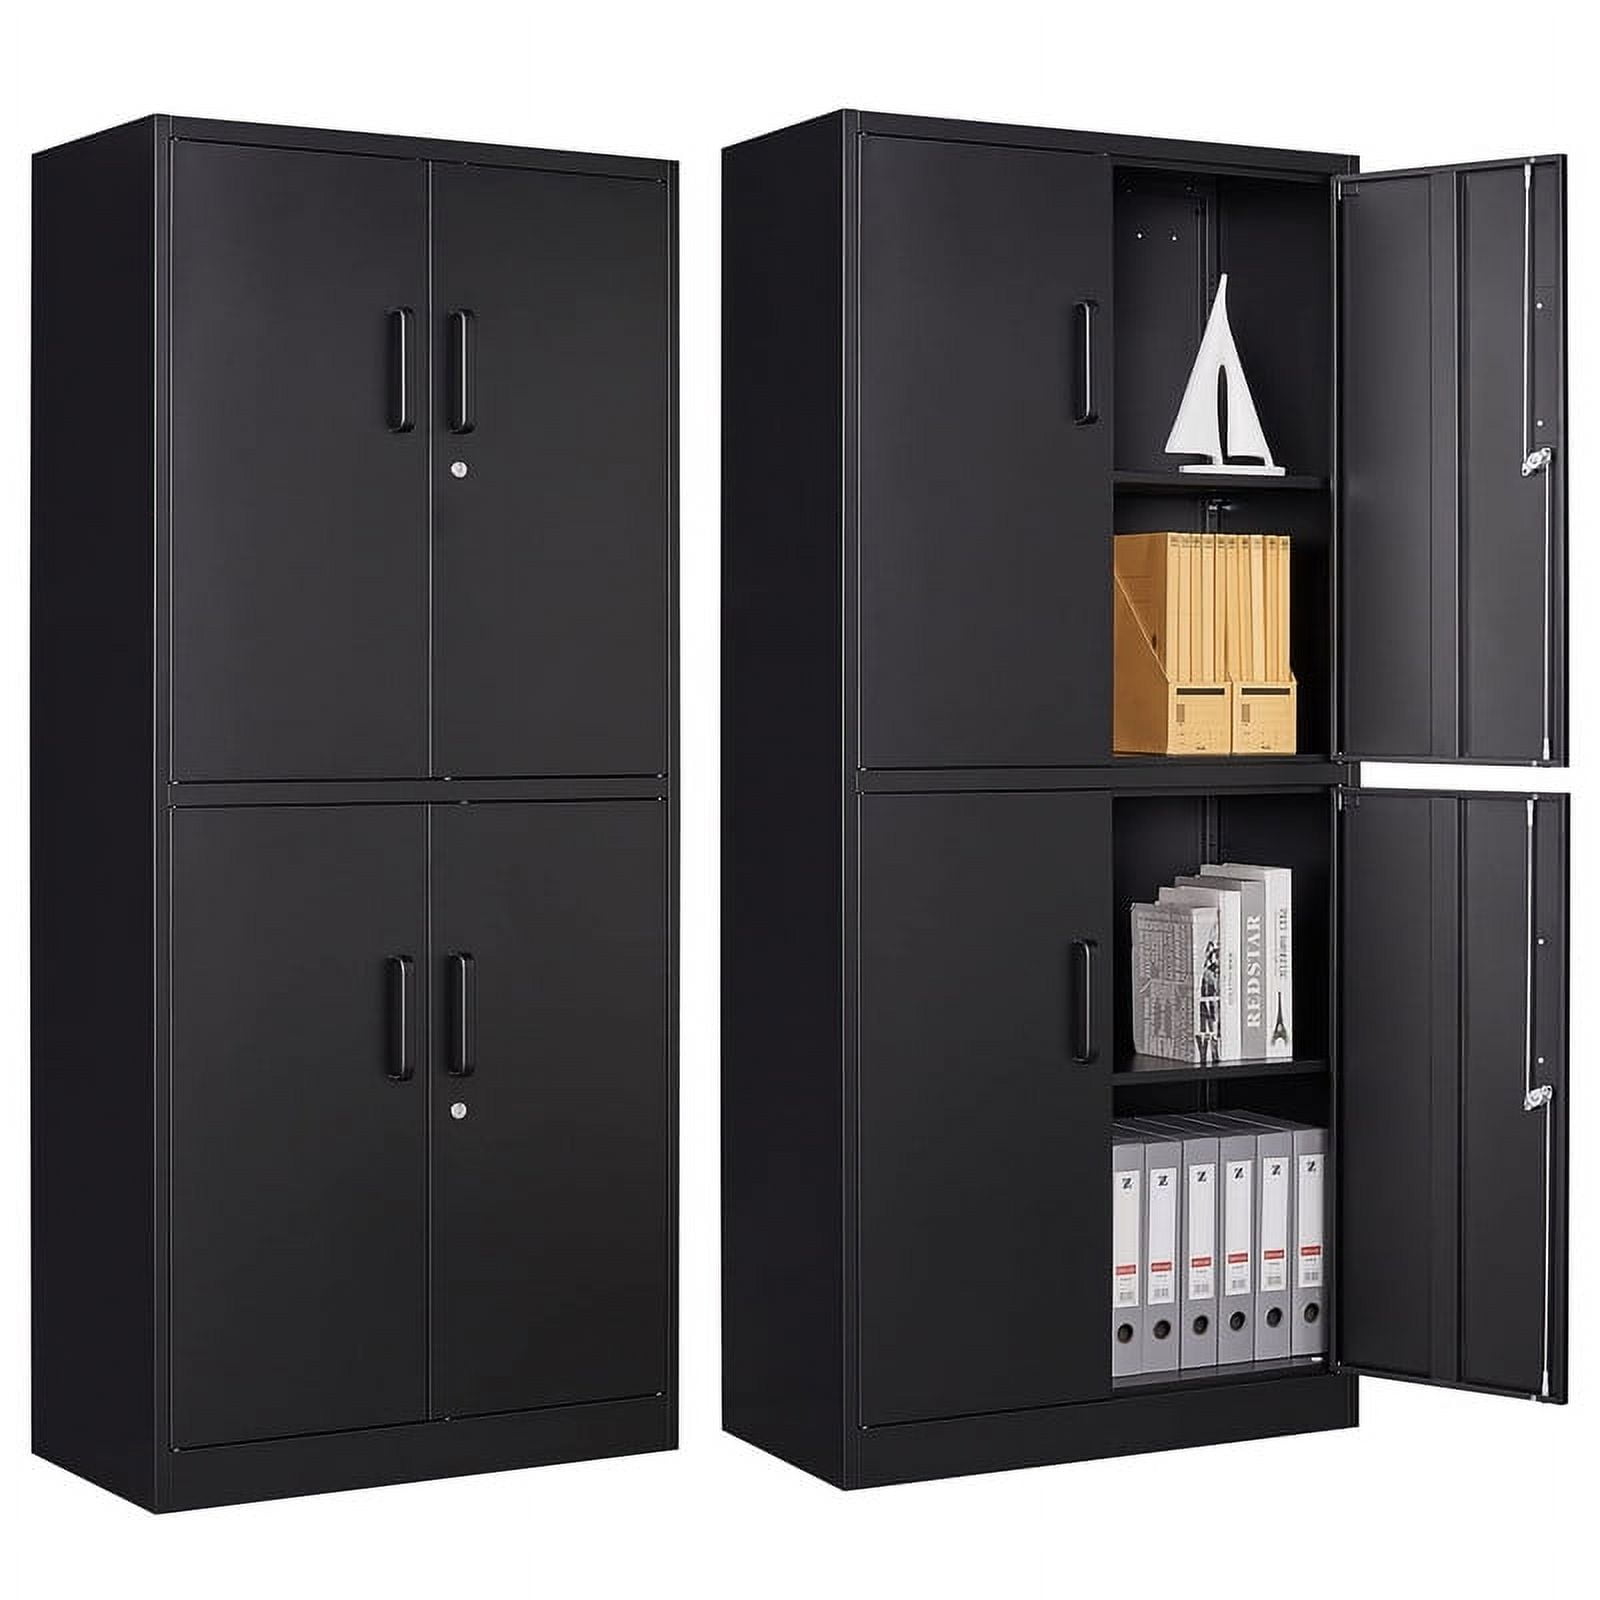 MIIIKO Metal Wardrobe Cabinet with Locking Doors, Metal Storage Armoire  Closet for Clothing, 2 Door Woodgrain Locker Cabinet with Adjustable  Shelves